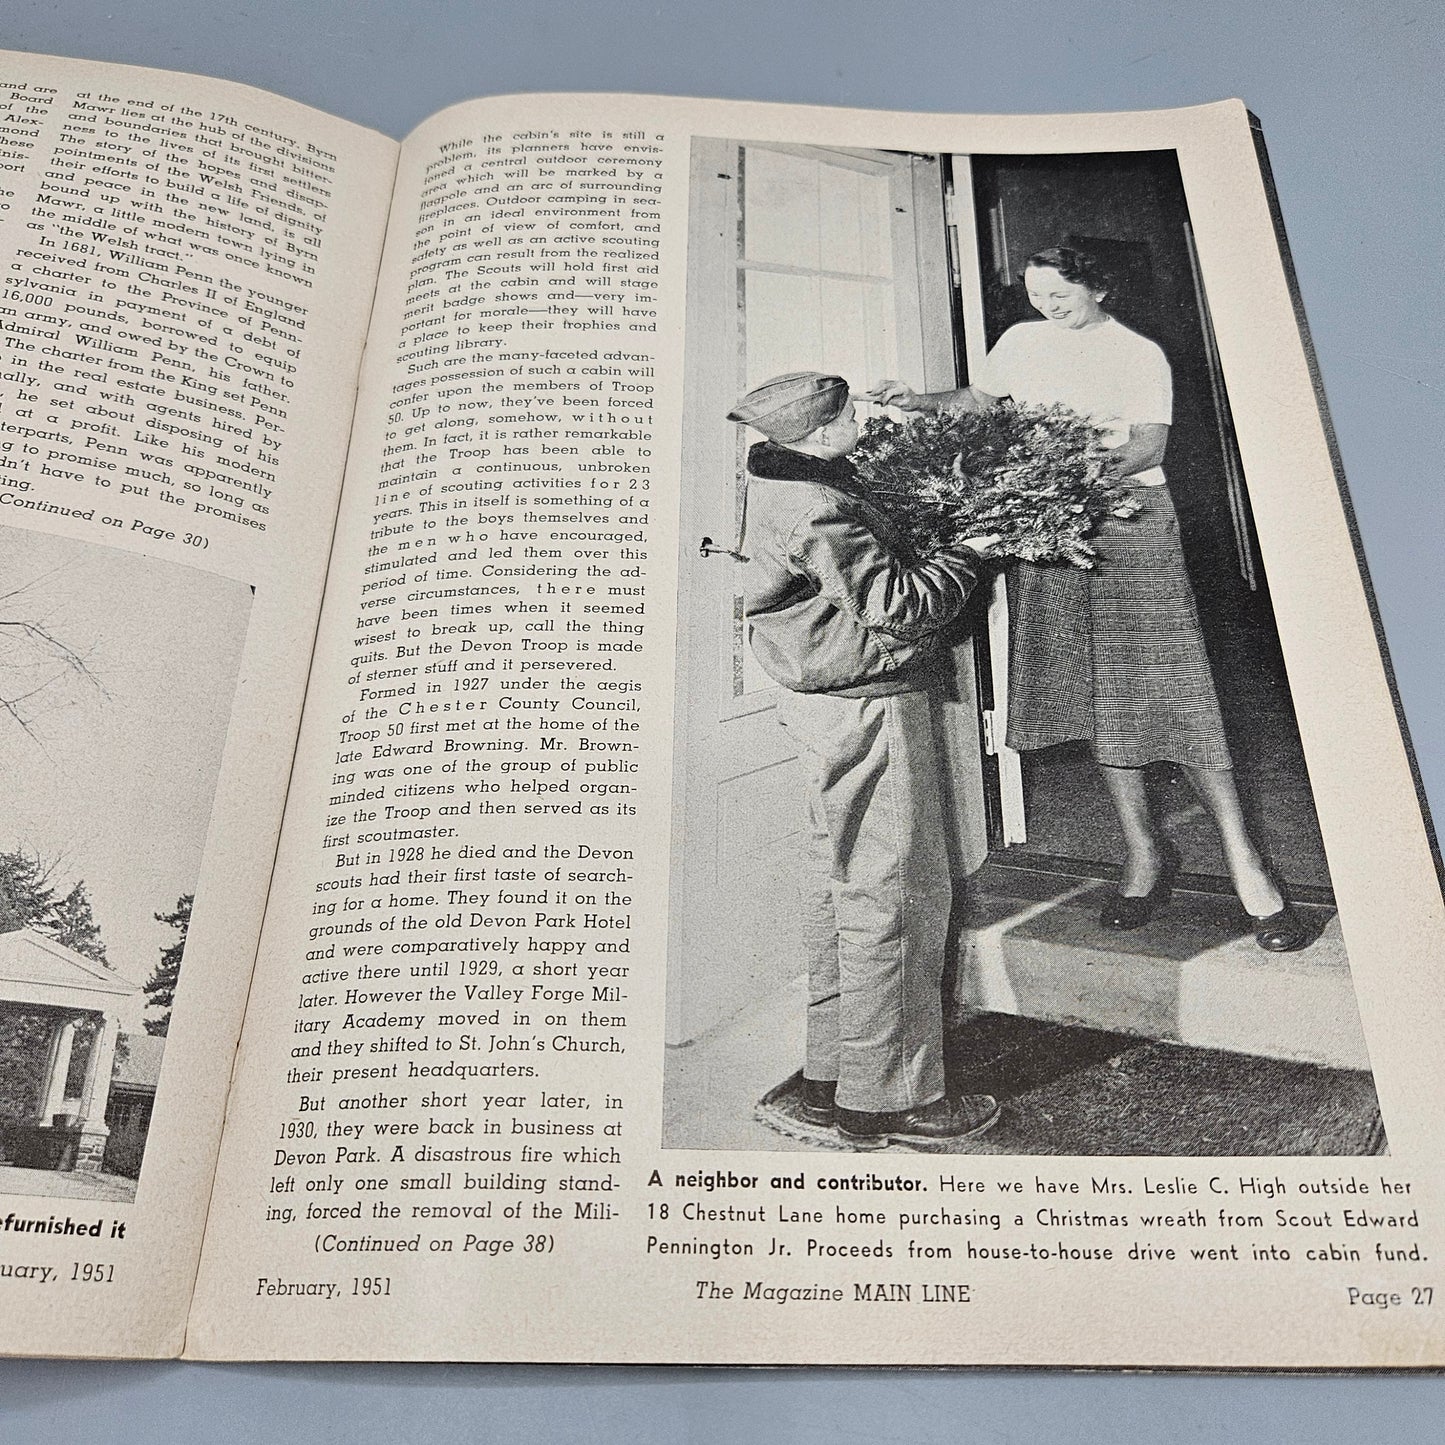 The Main Line Magazine - 1951 (Bryn Mawr etc. Philadelphia)